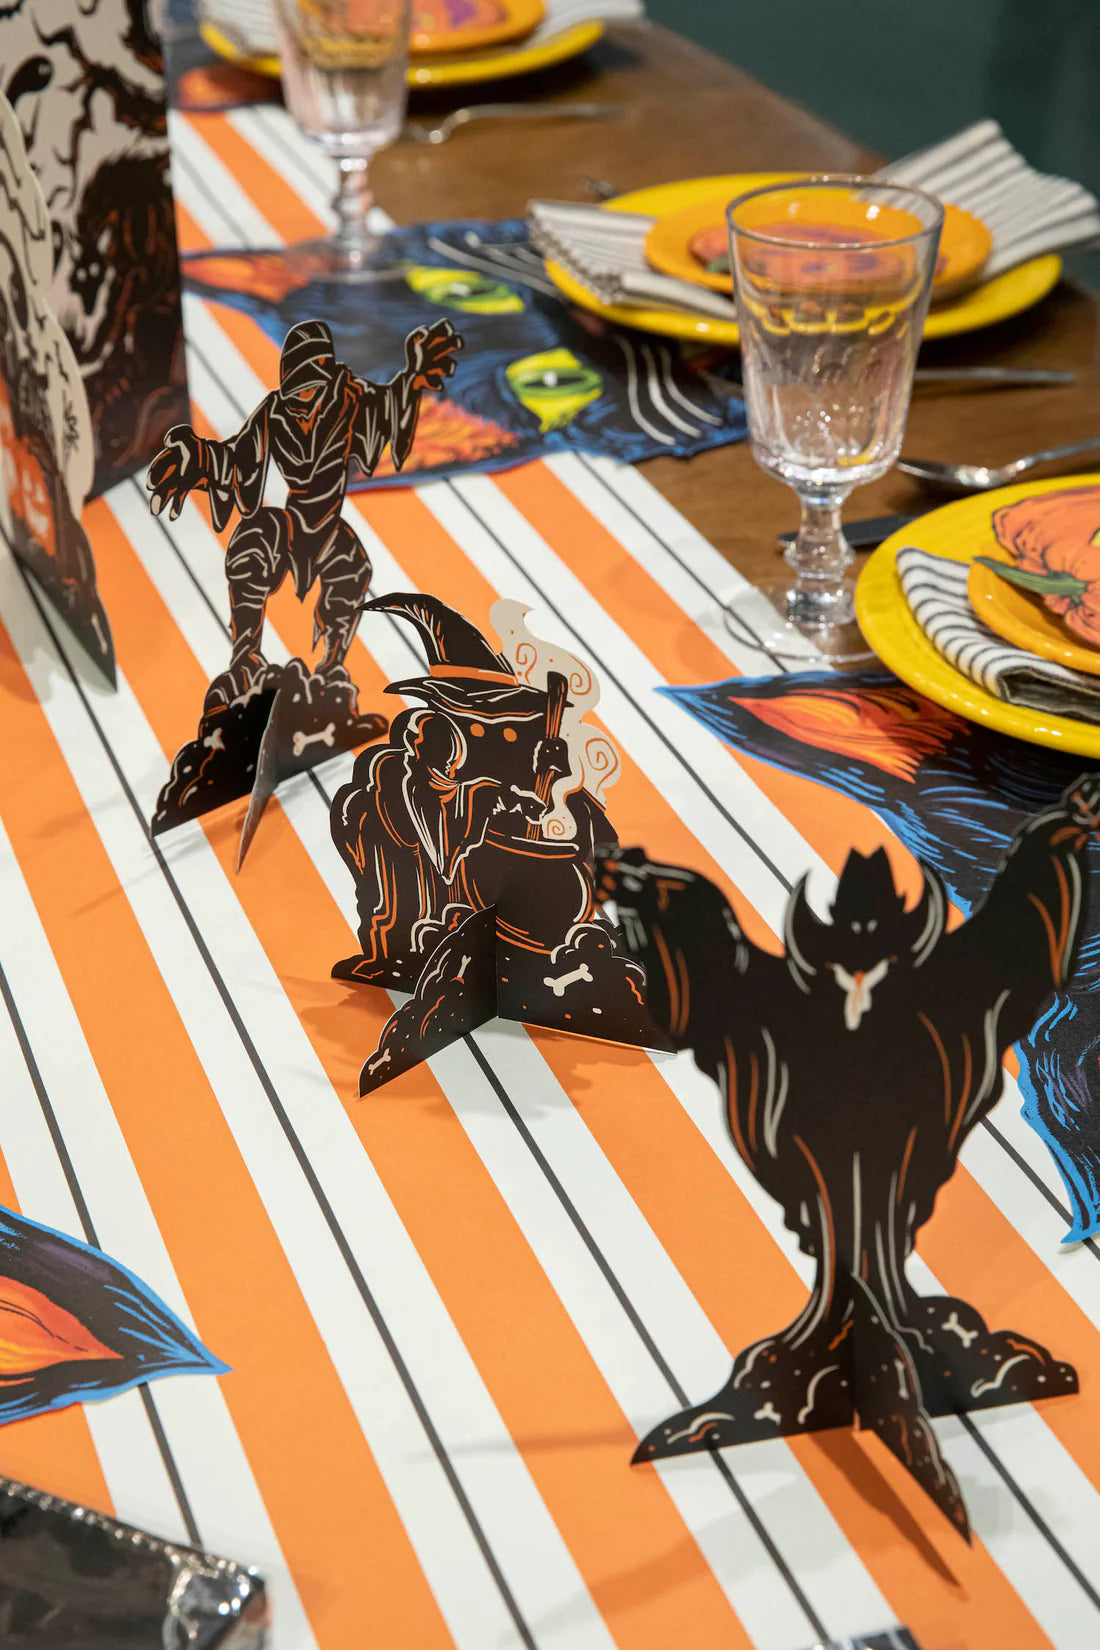 Paper Table Runner: Orange & Black Awning Stripe